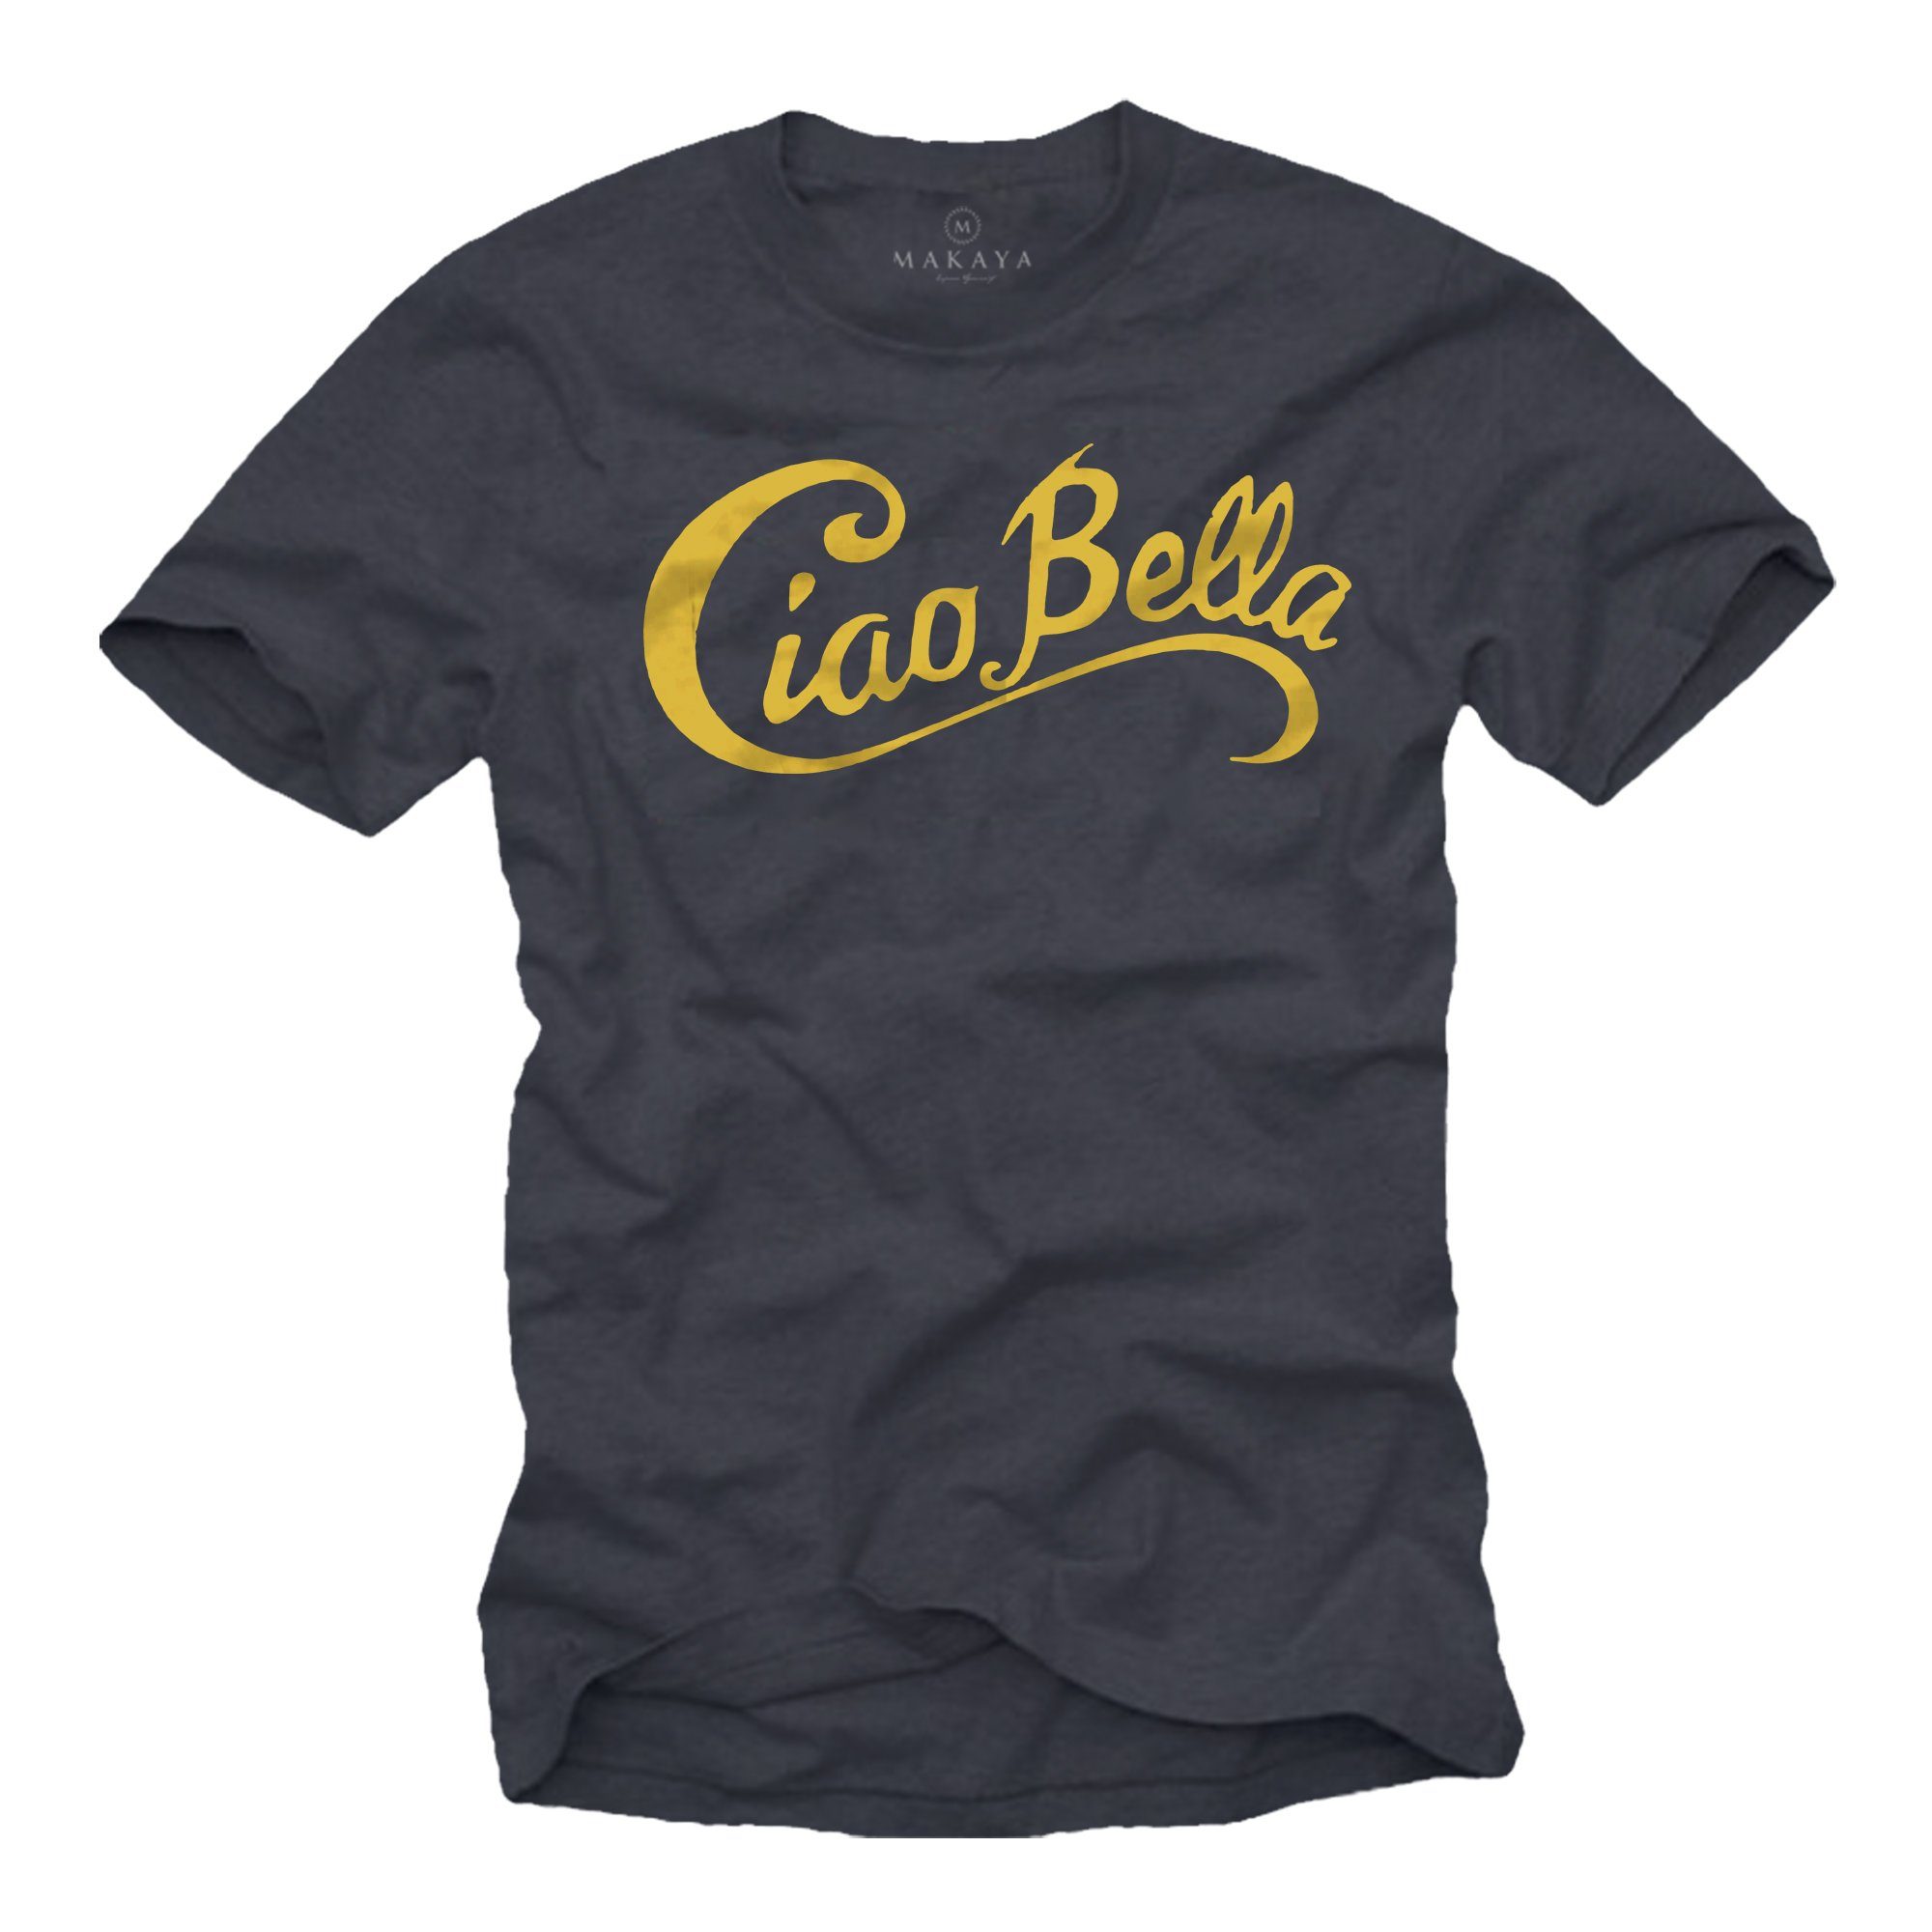 Motiv Blaugrau Mode Spruch Herren Ciao Bella Italien Print-Shirt MAKAYA Italienischer Coole Style Logo,